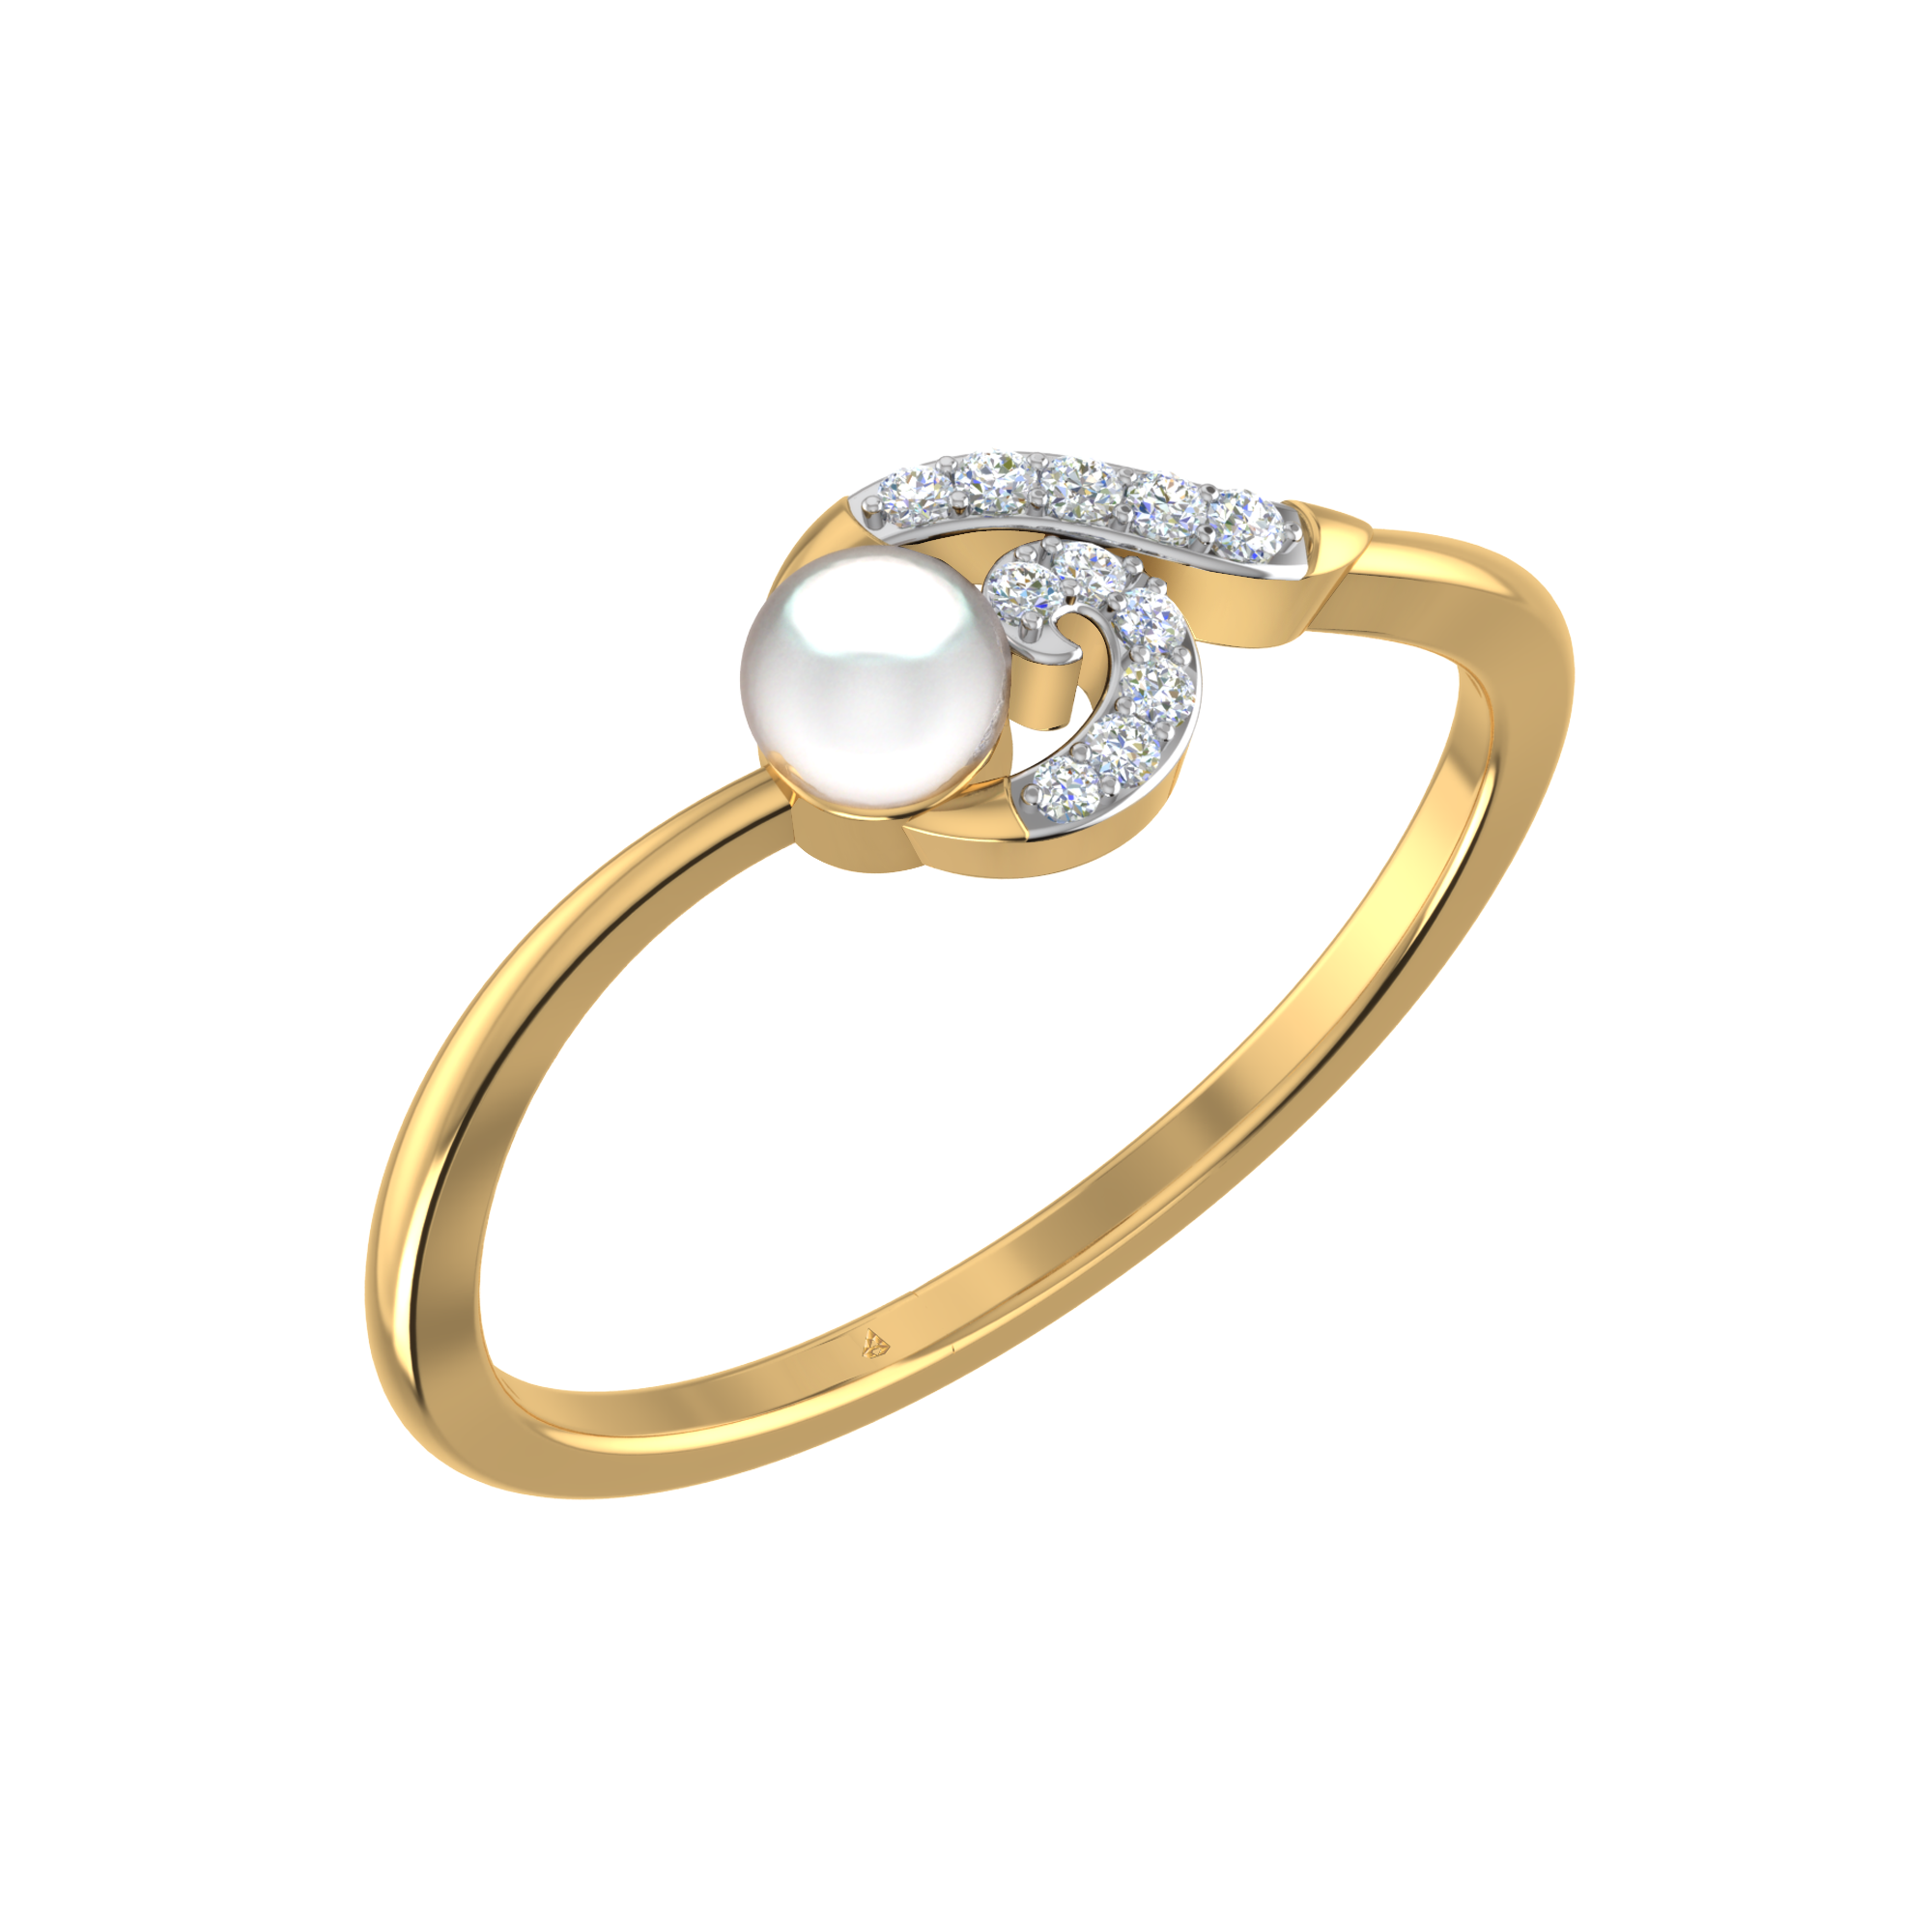 Pearl Rings For Women - Buy Pearl Rings For Women online in India